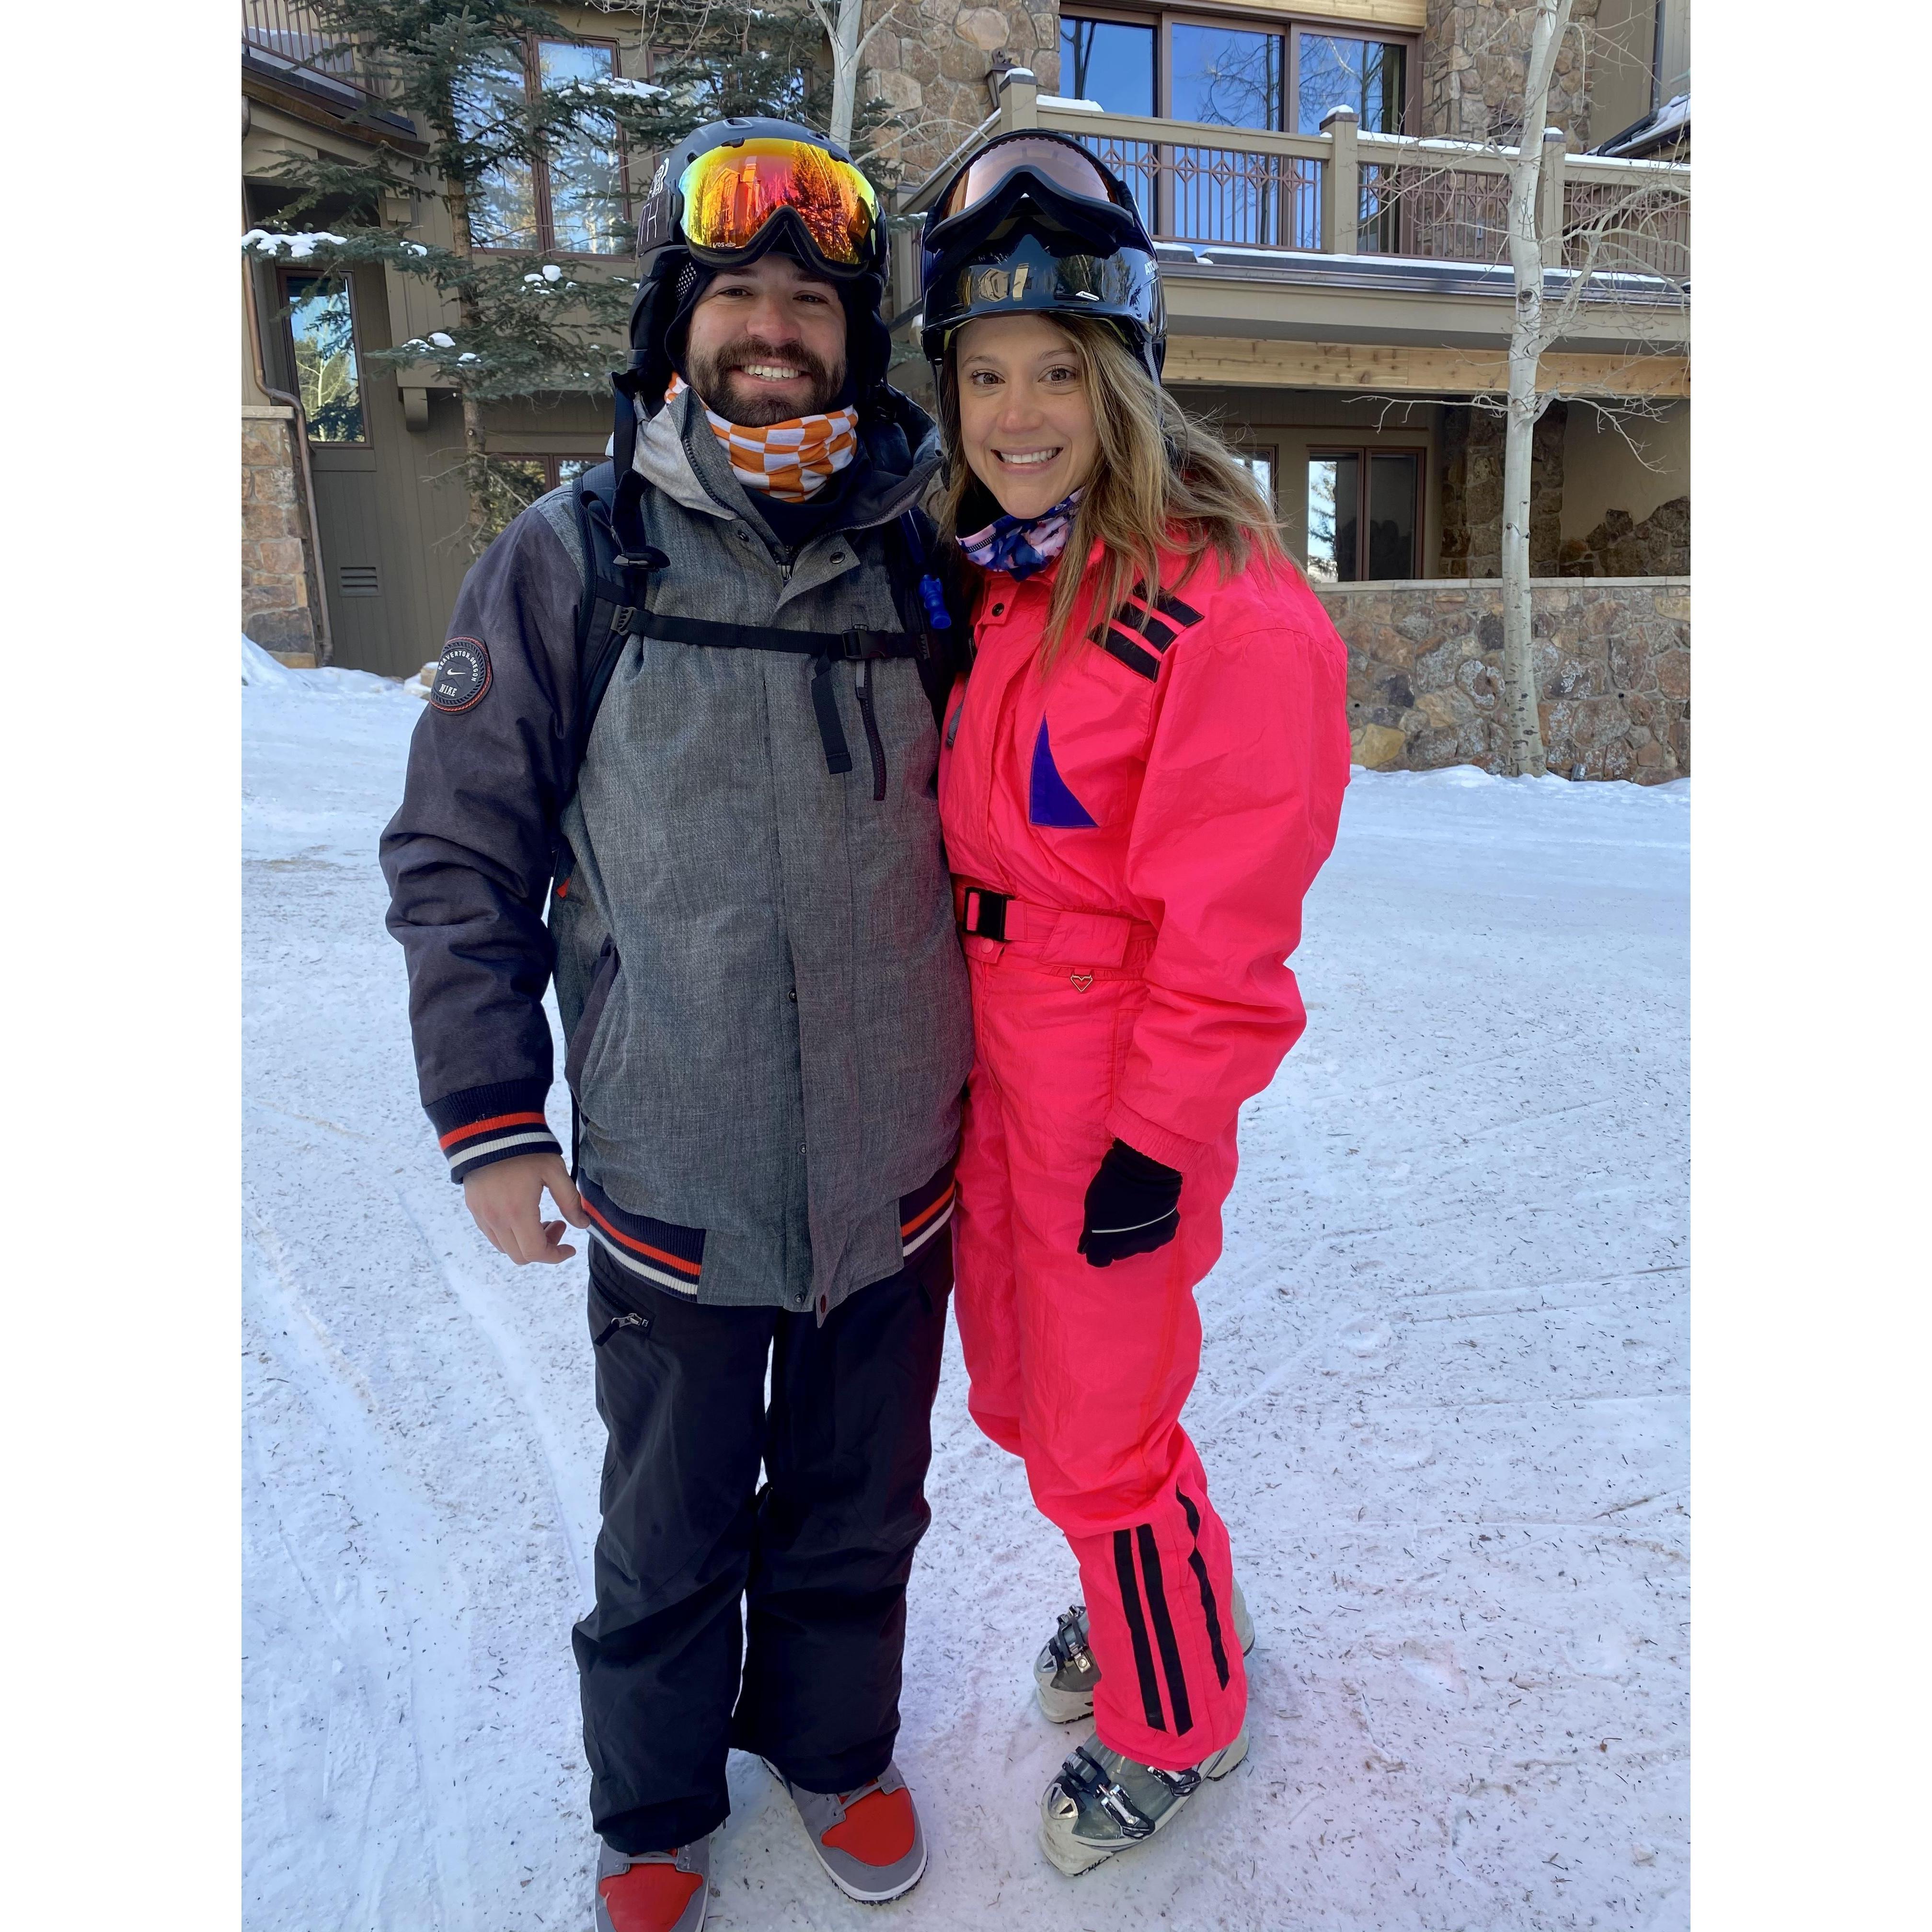 First ski trip together!